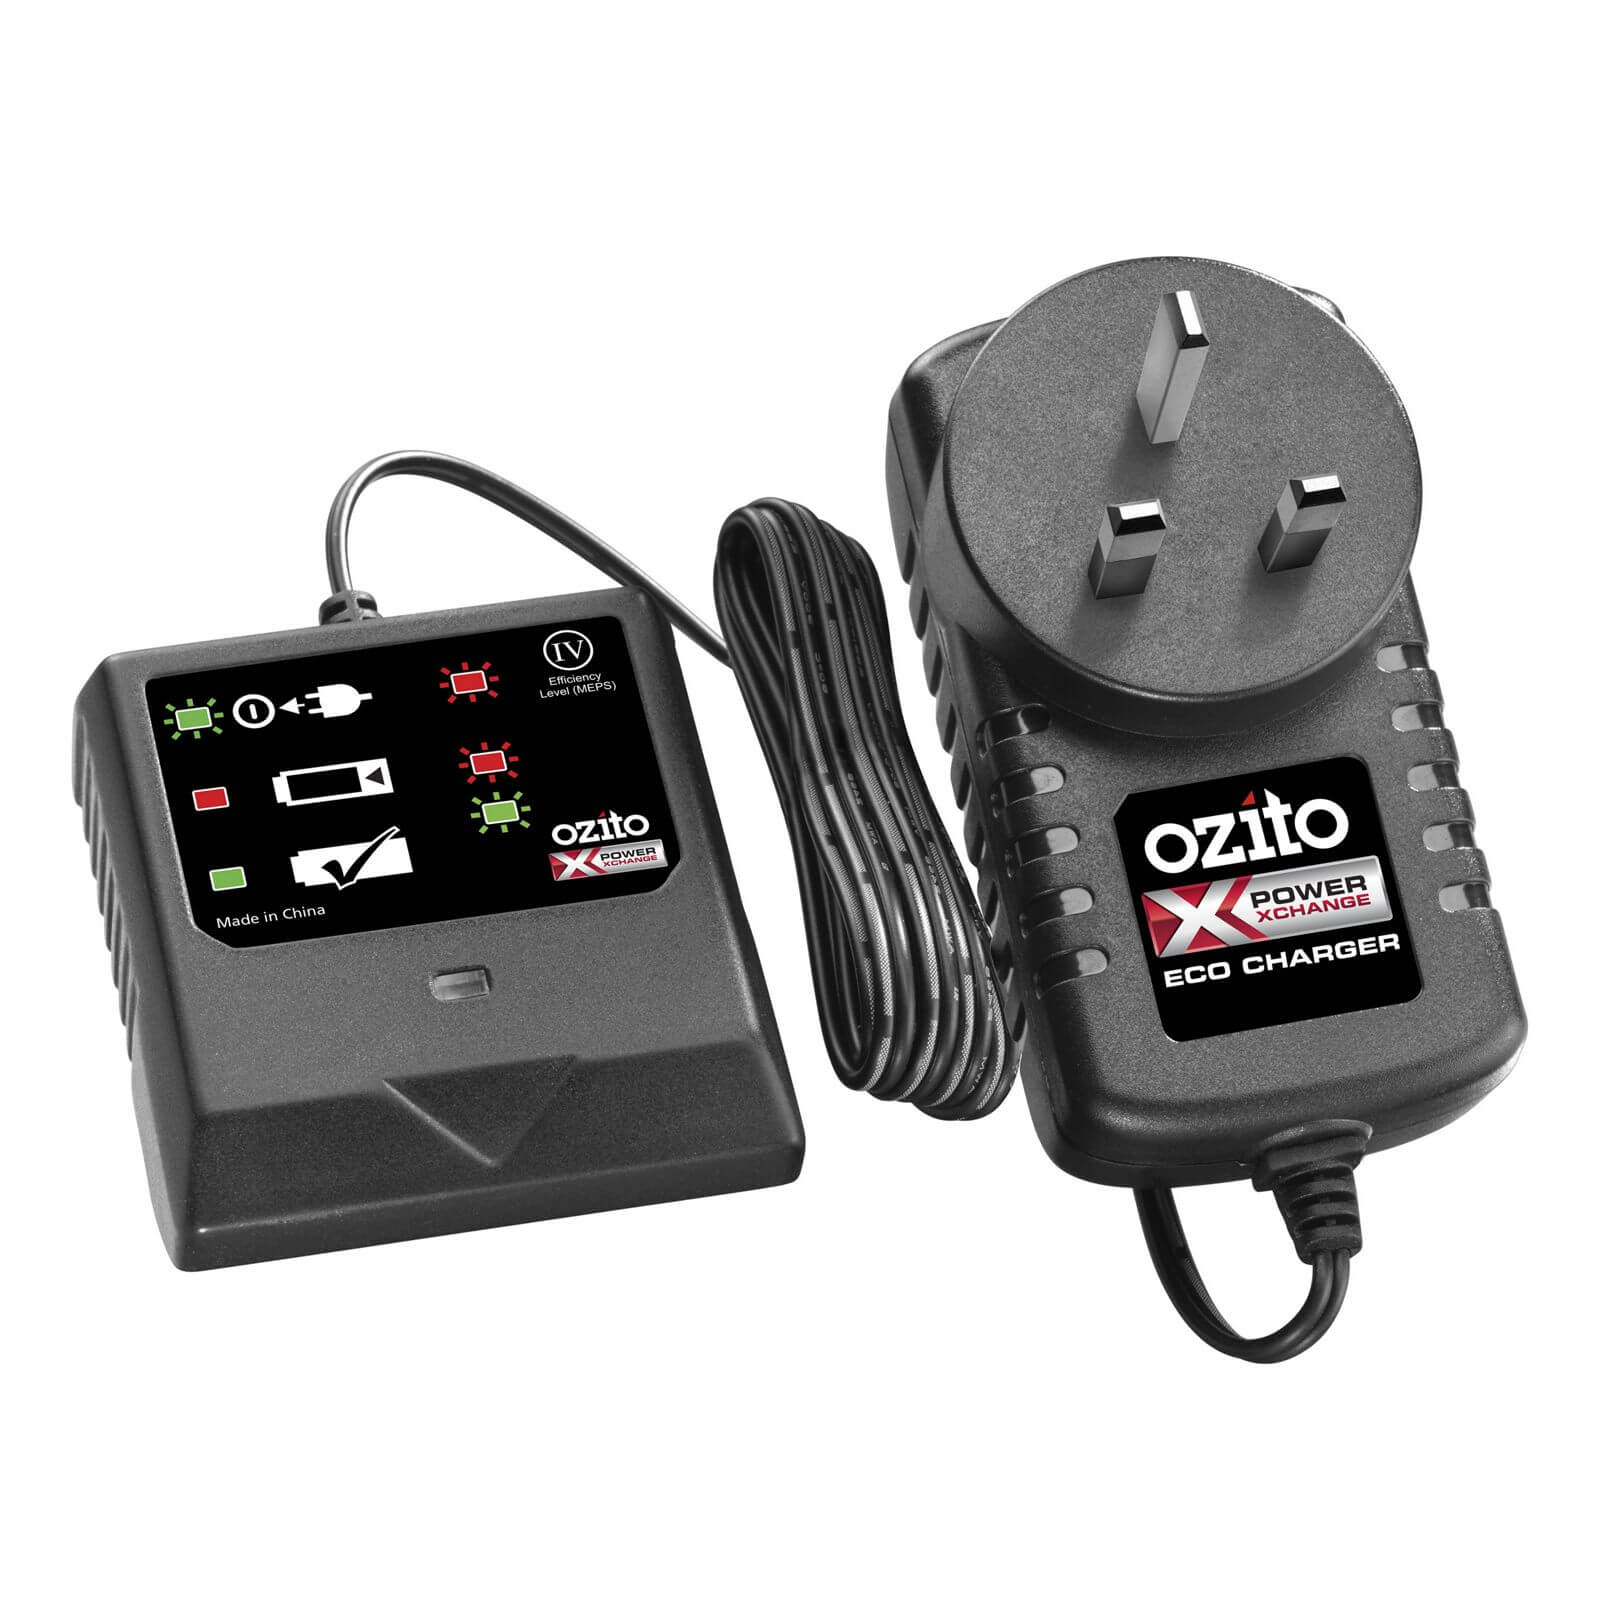 Ozito Power X Change 18V Eco Charger